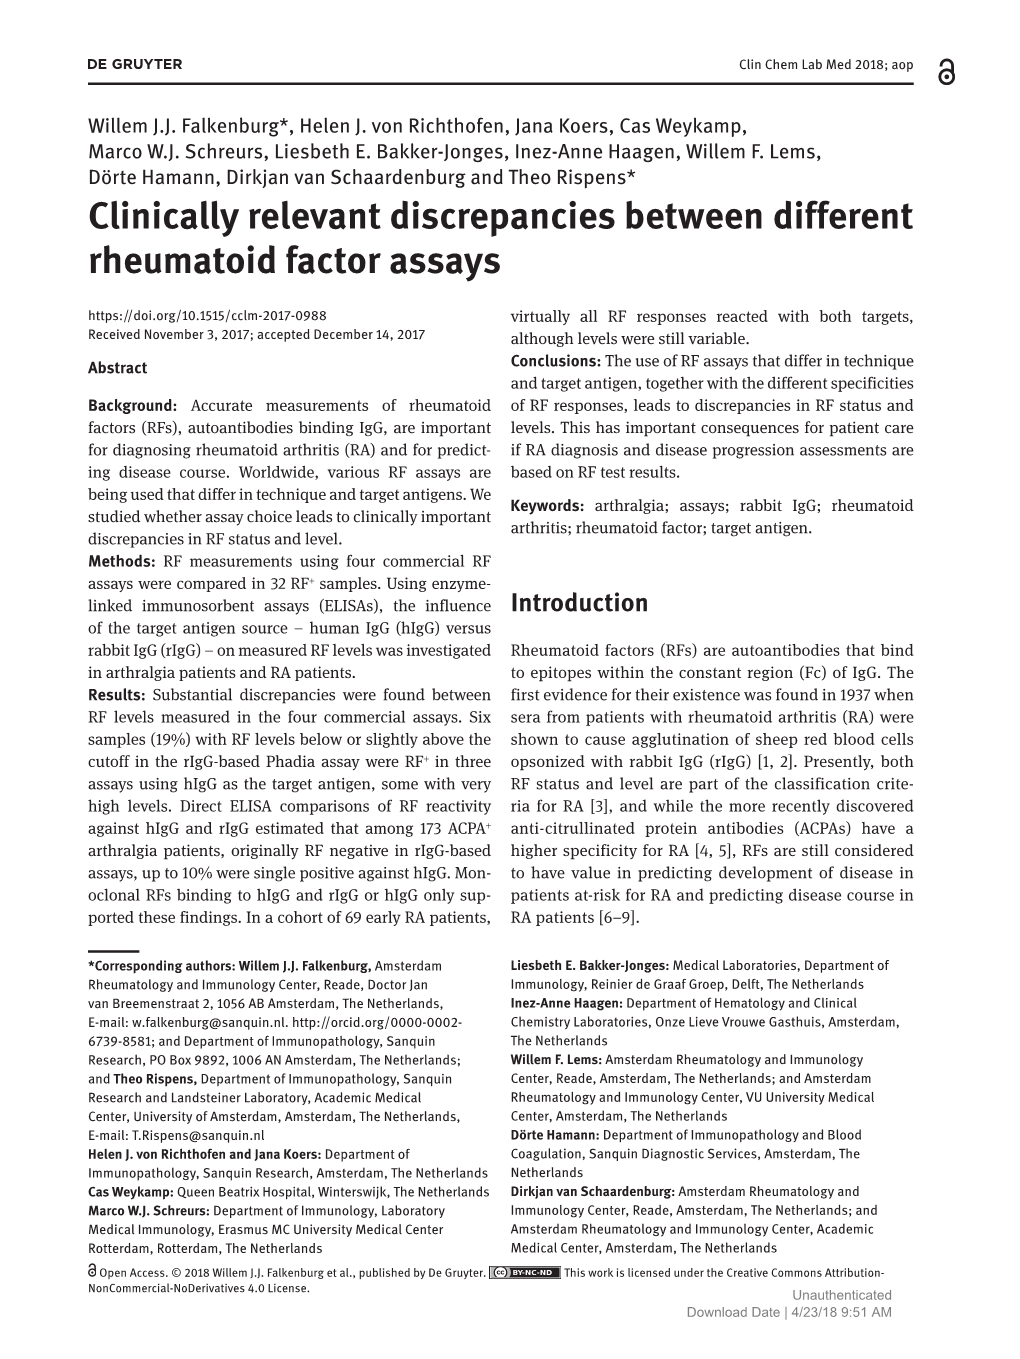 Clinically Relevant Discrepancies Between Different Rheumatoid Factor